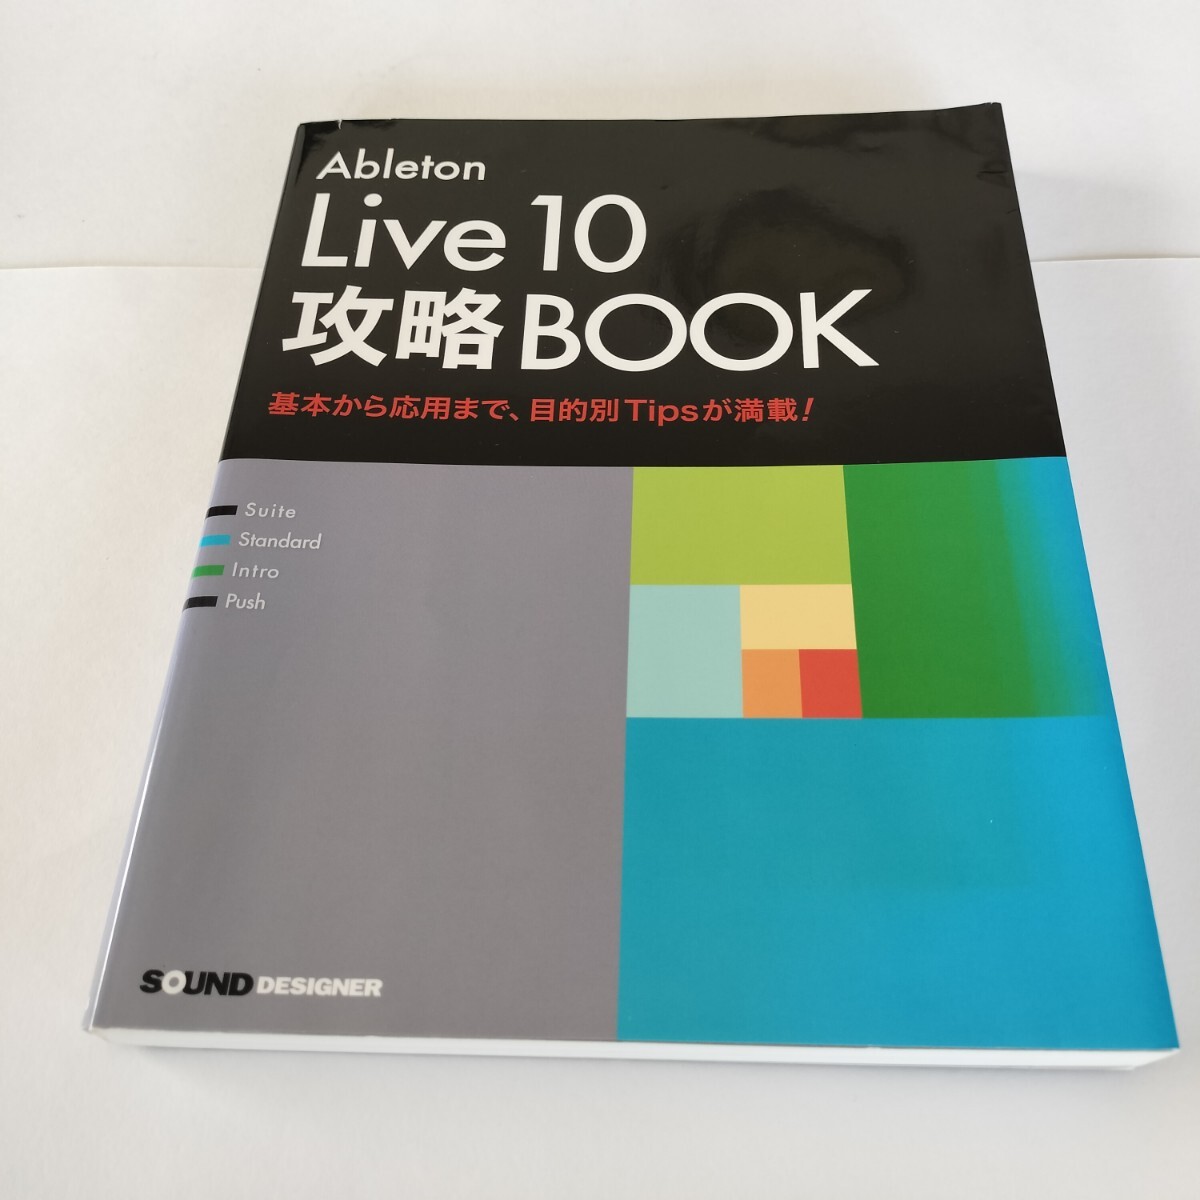 [Ableton Live 10..Book] Takeuchi one . work sound * designer 2018 year 3 month 15 day the first version 